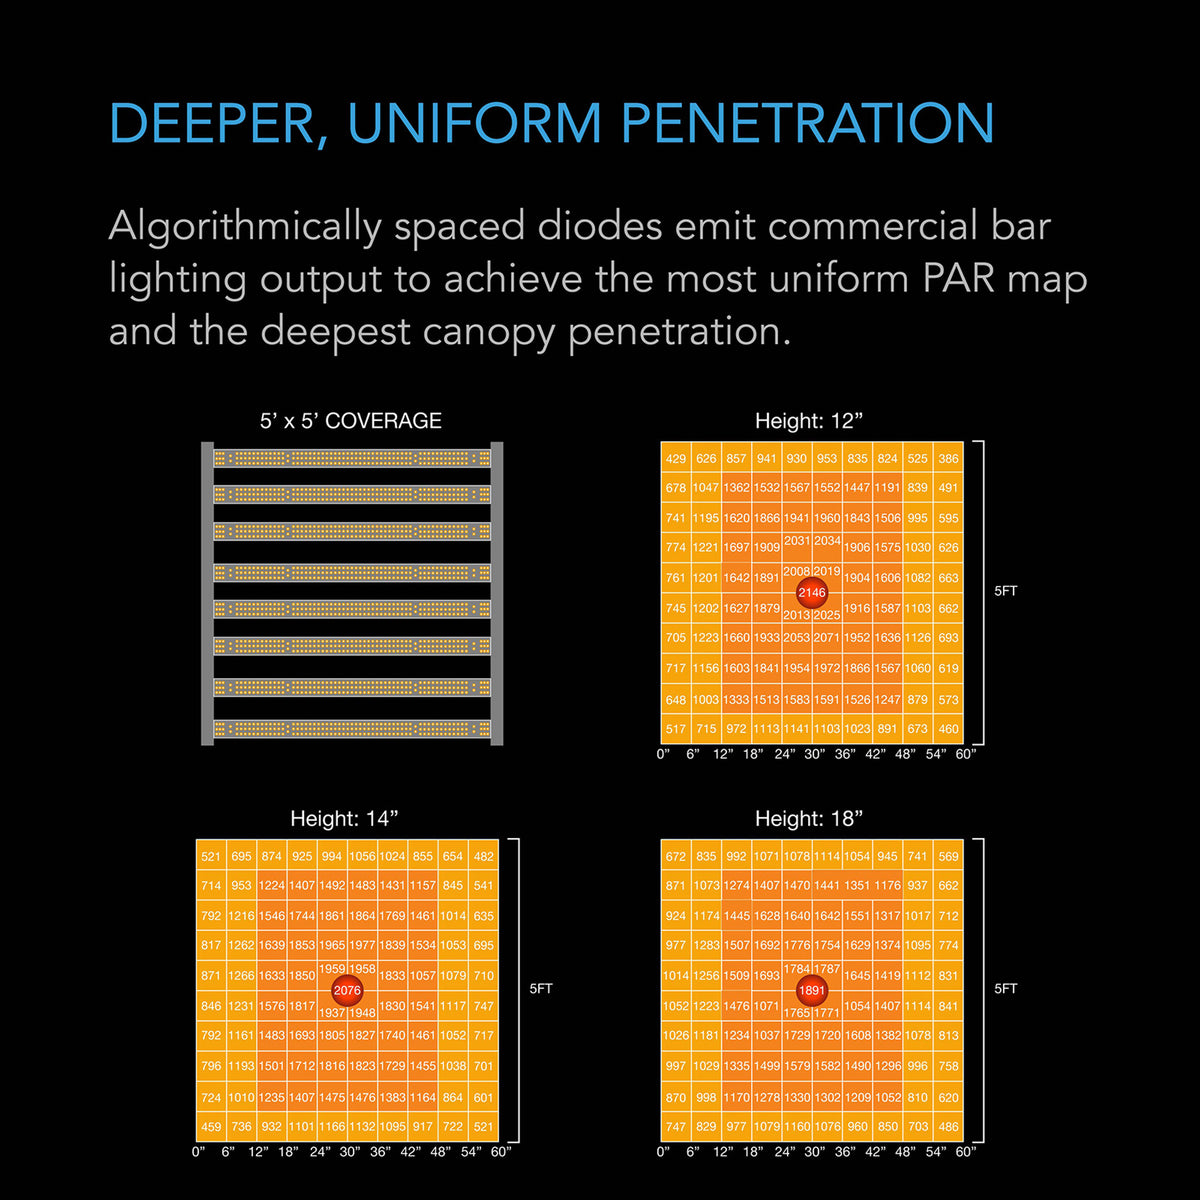 Deeper. uniform penetration with Evo 10